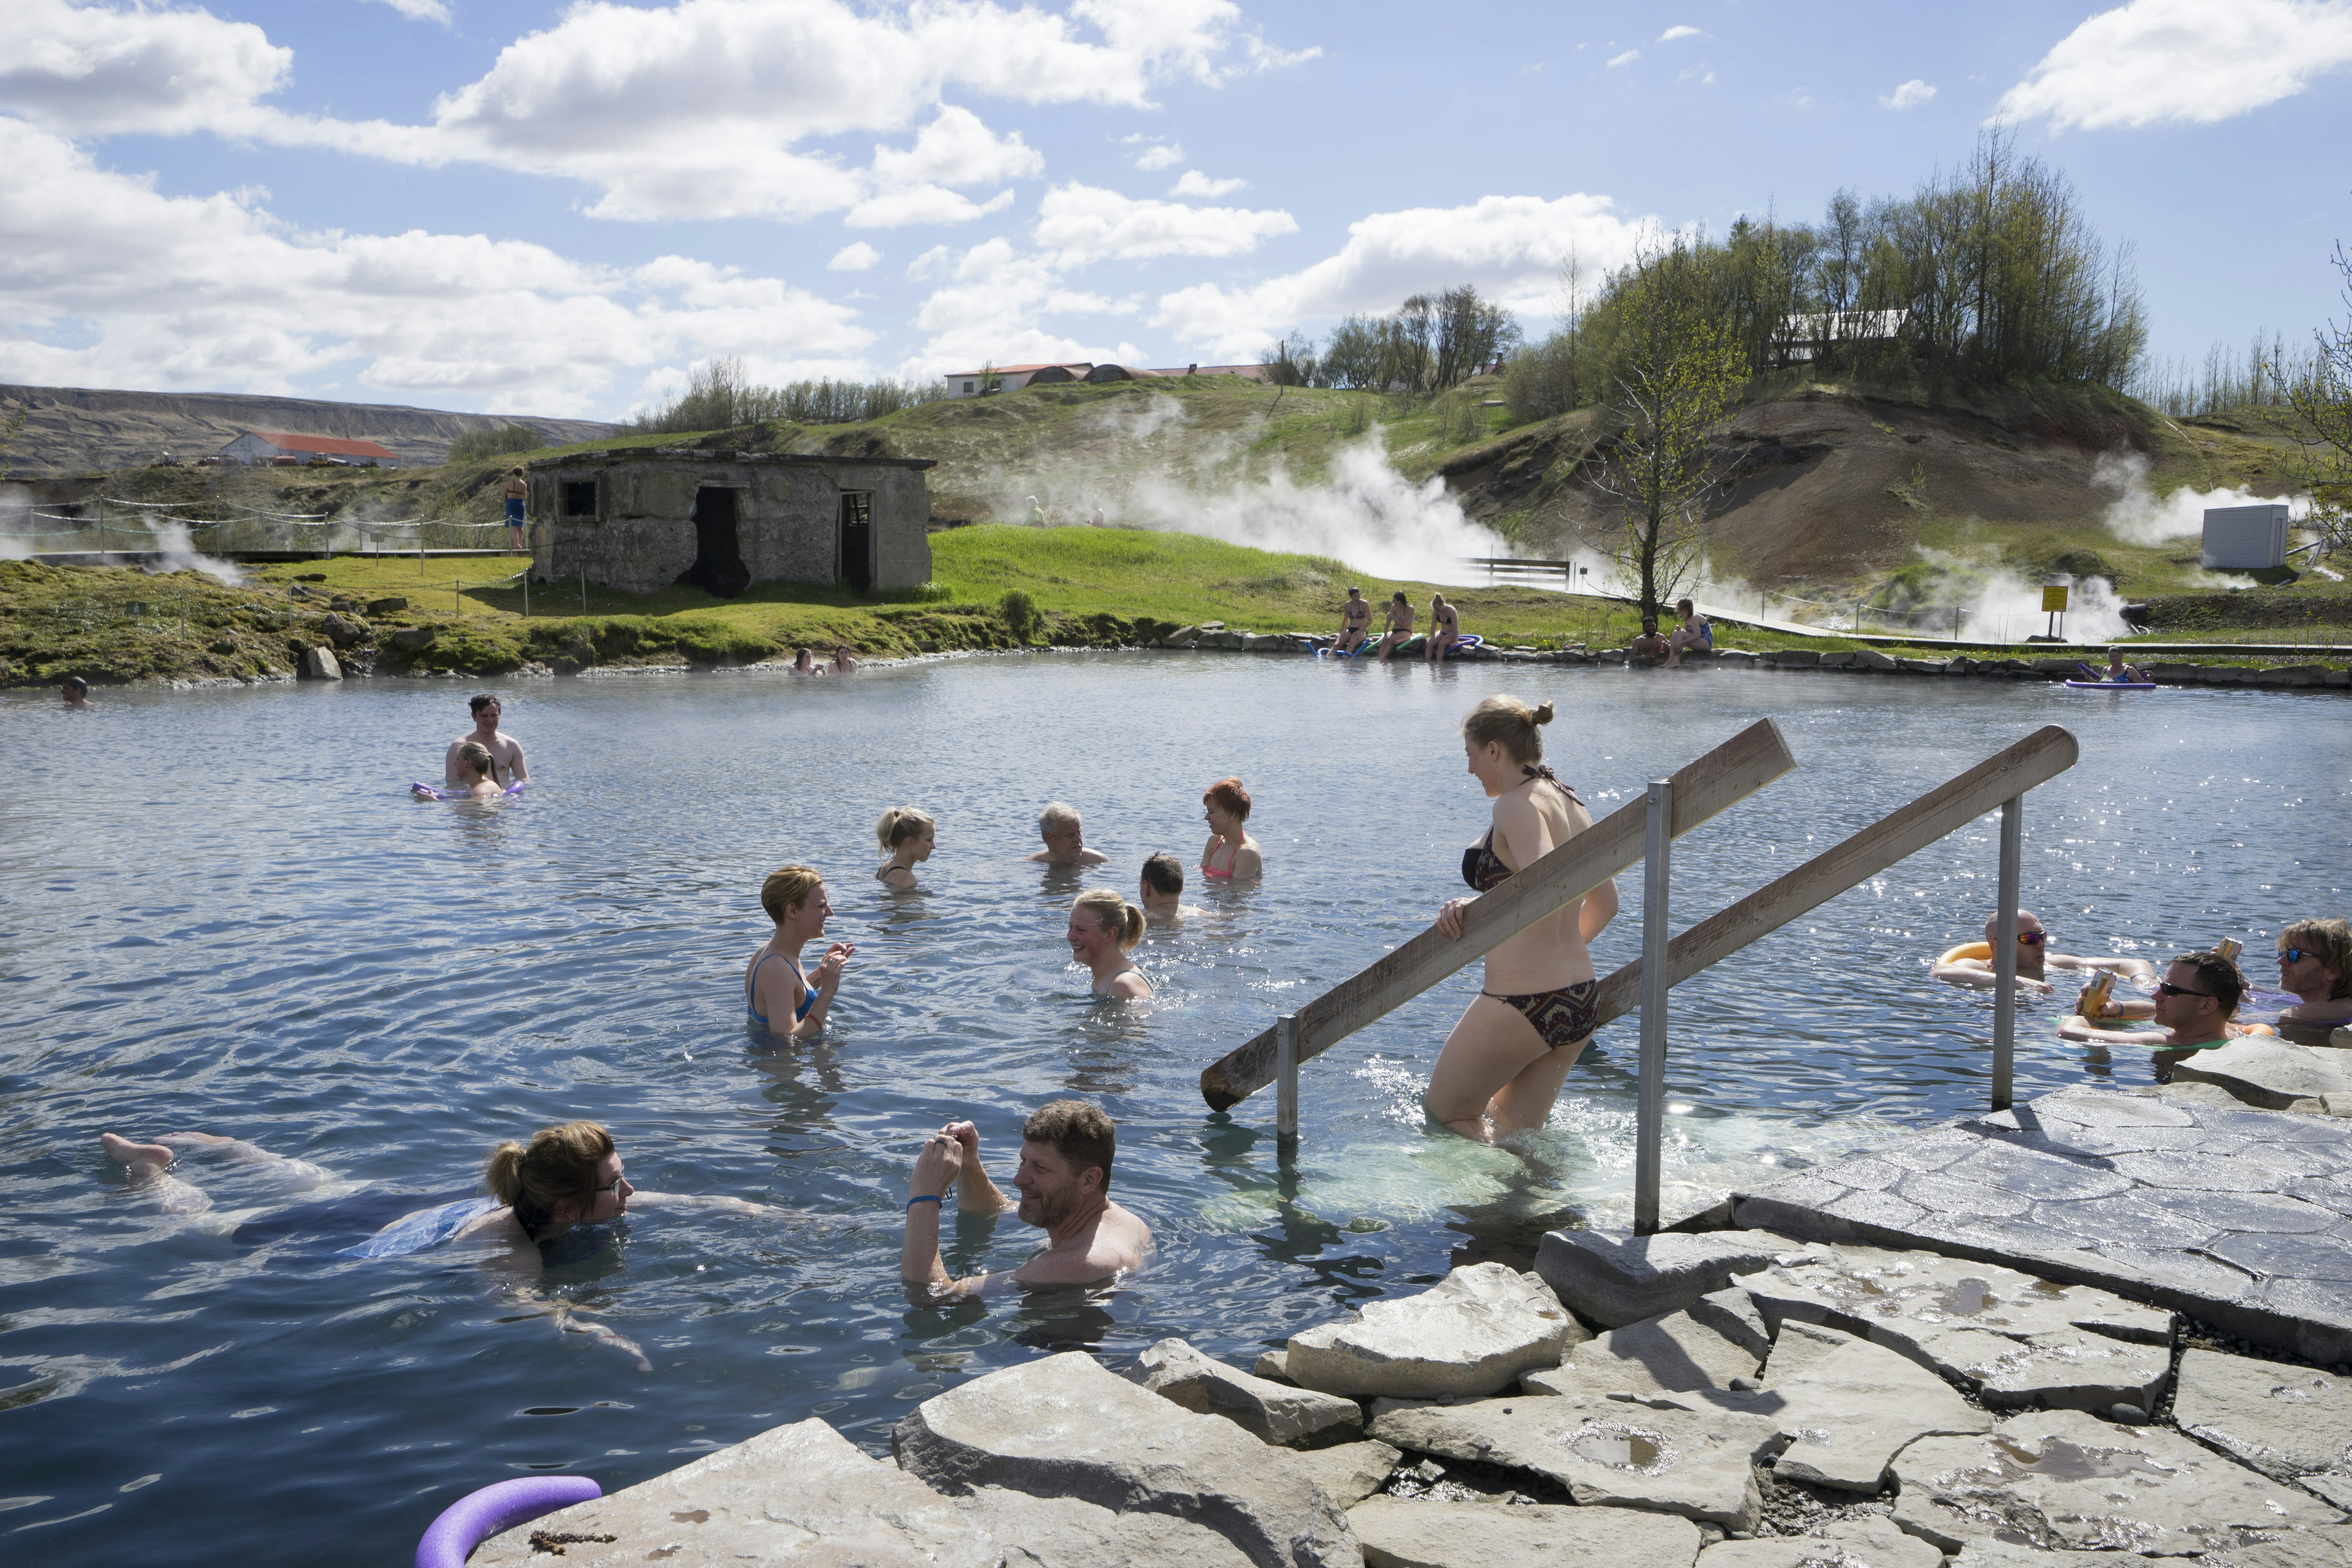 People enjoying a soak in some hot springs